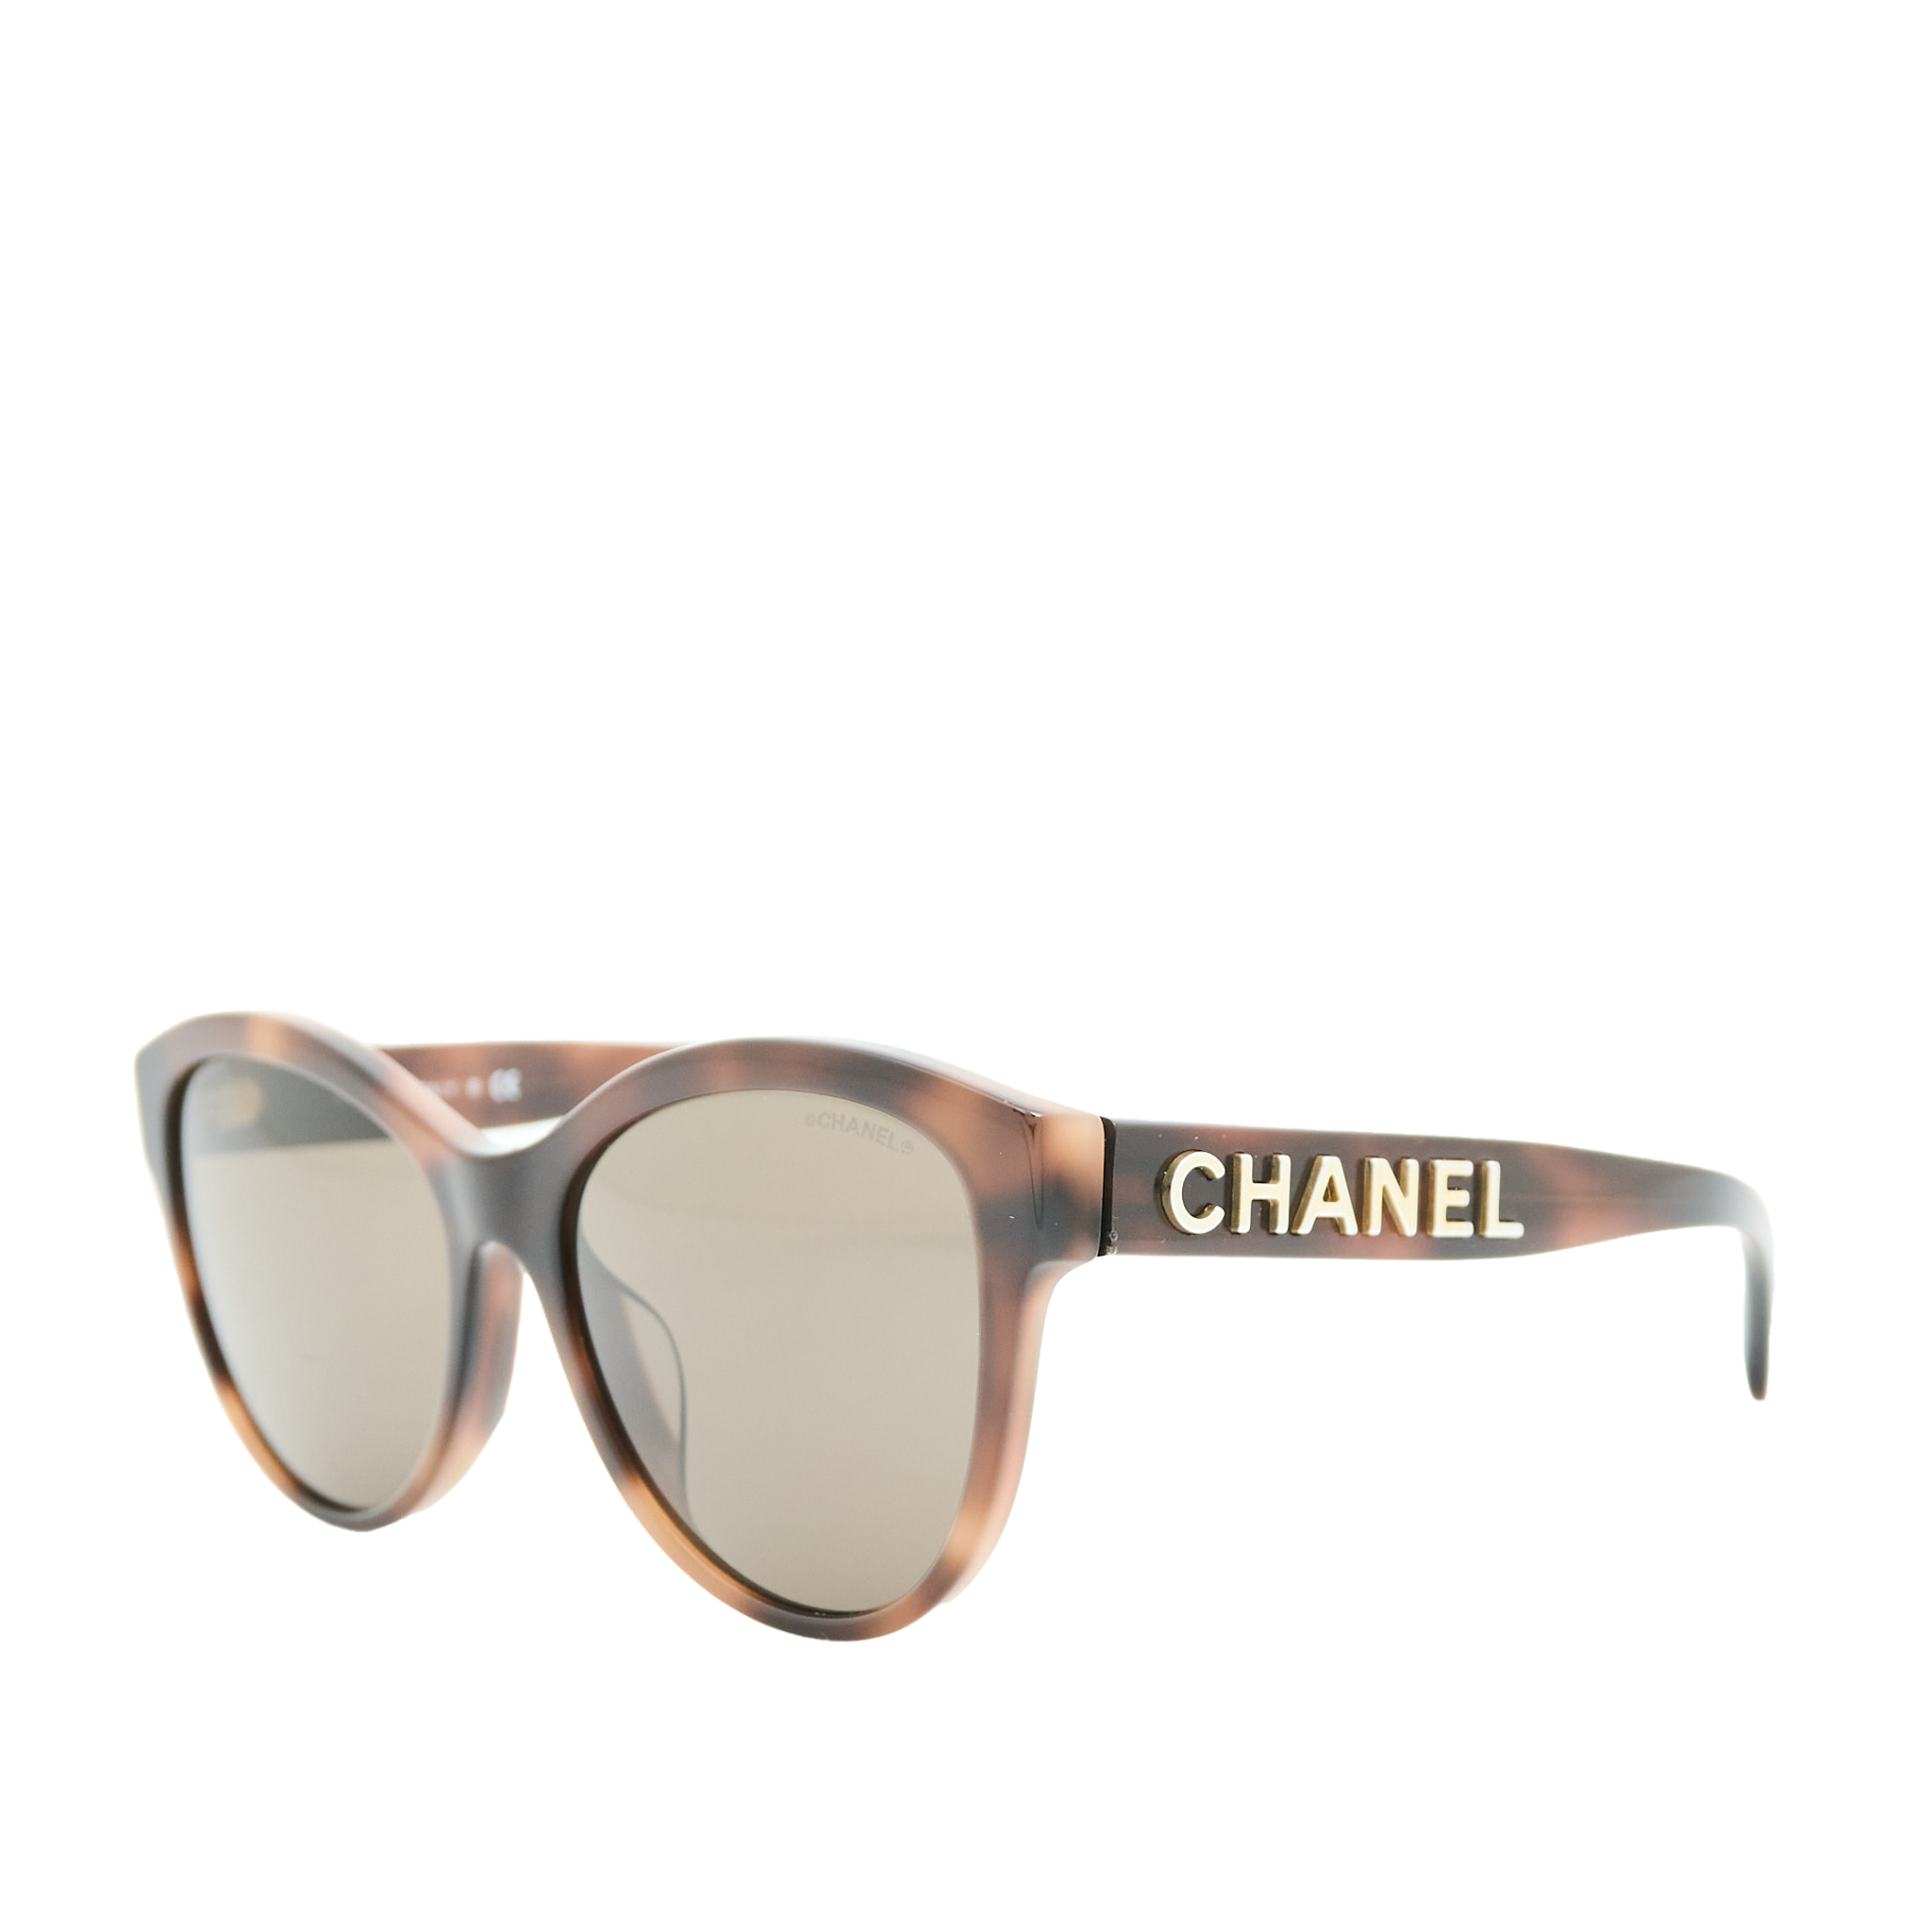 Chanel Brown Tortoise Shell Sunglasses